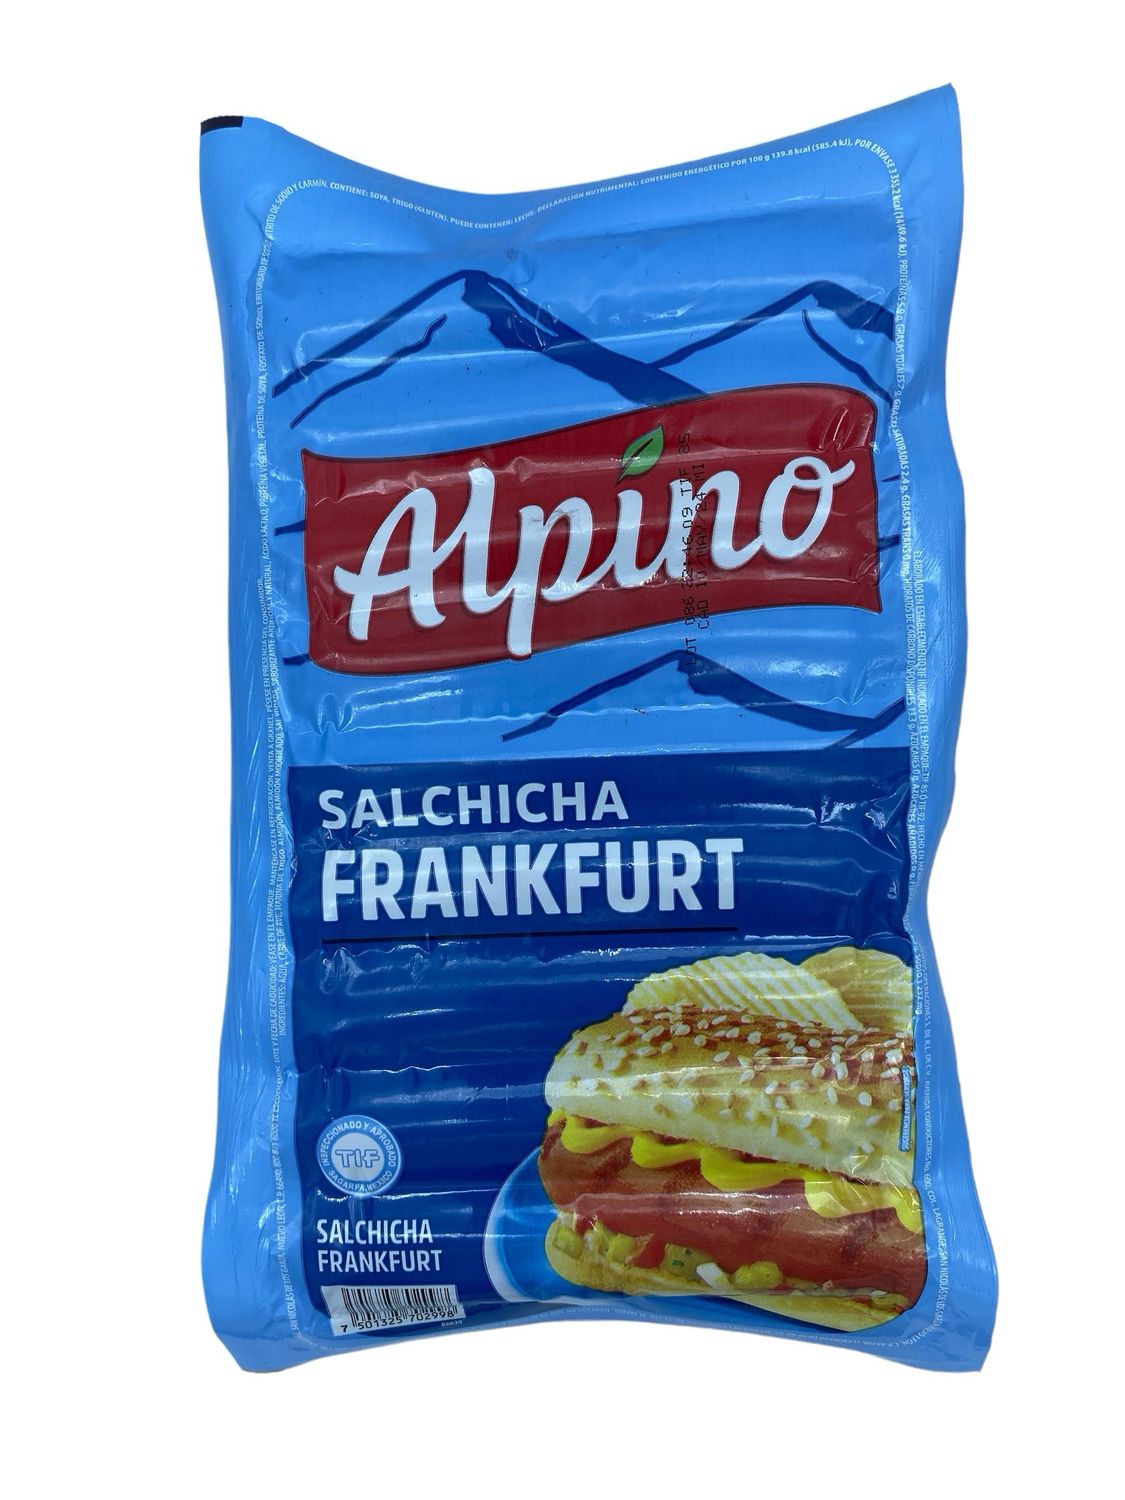 Salchicha de Pavo Frankfurt Alpino 2.4 kg aprox.